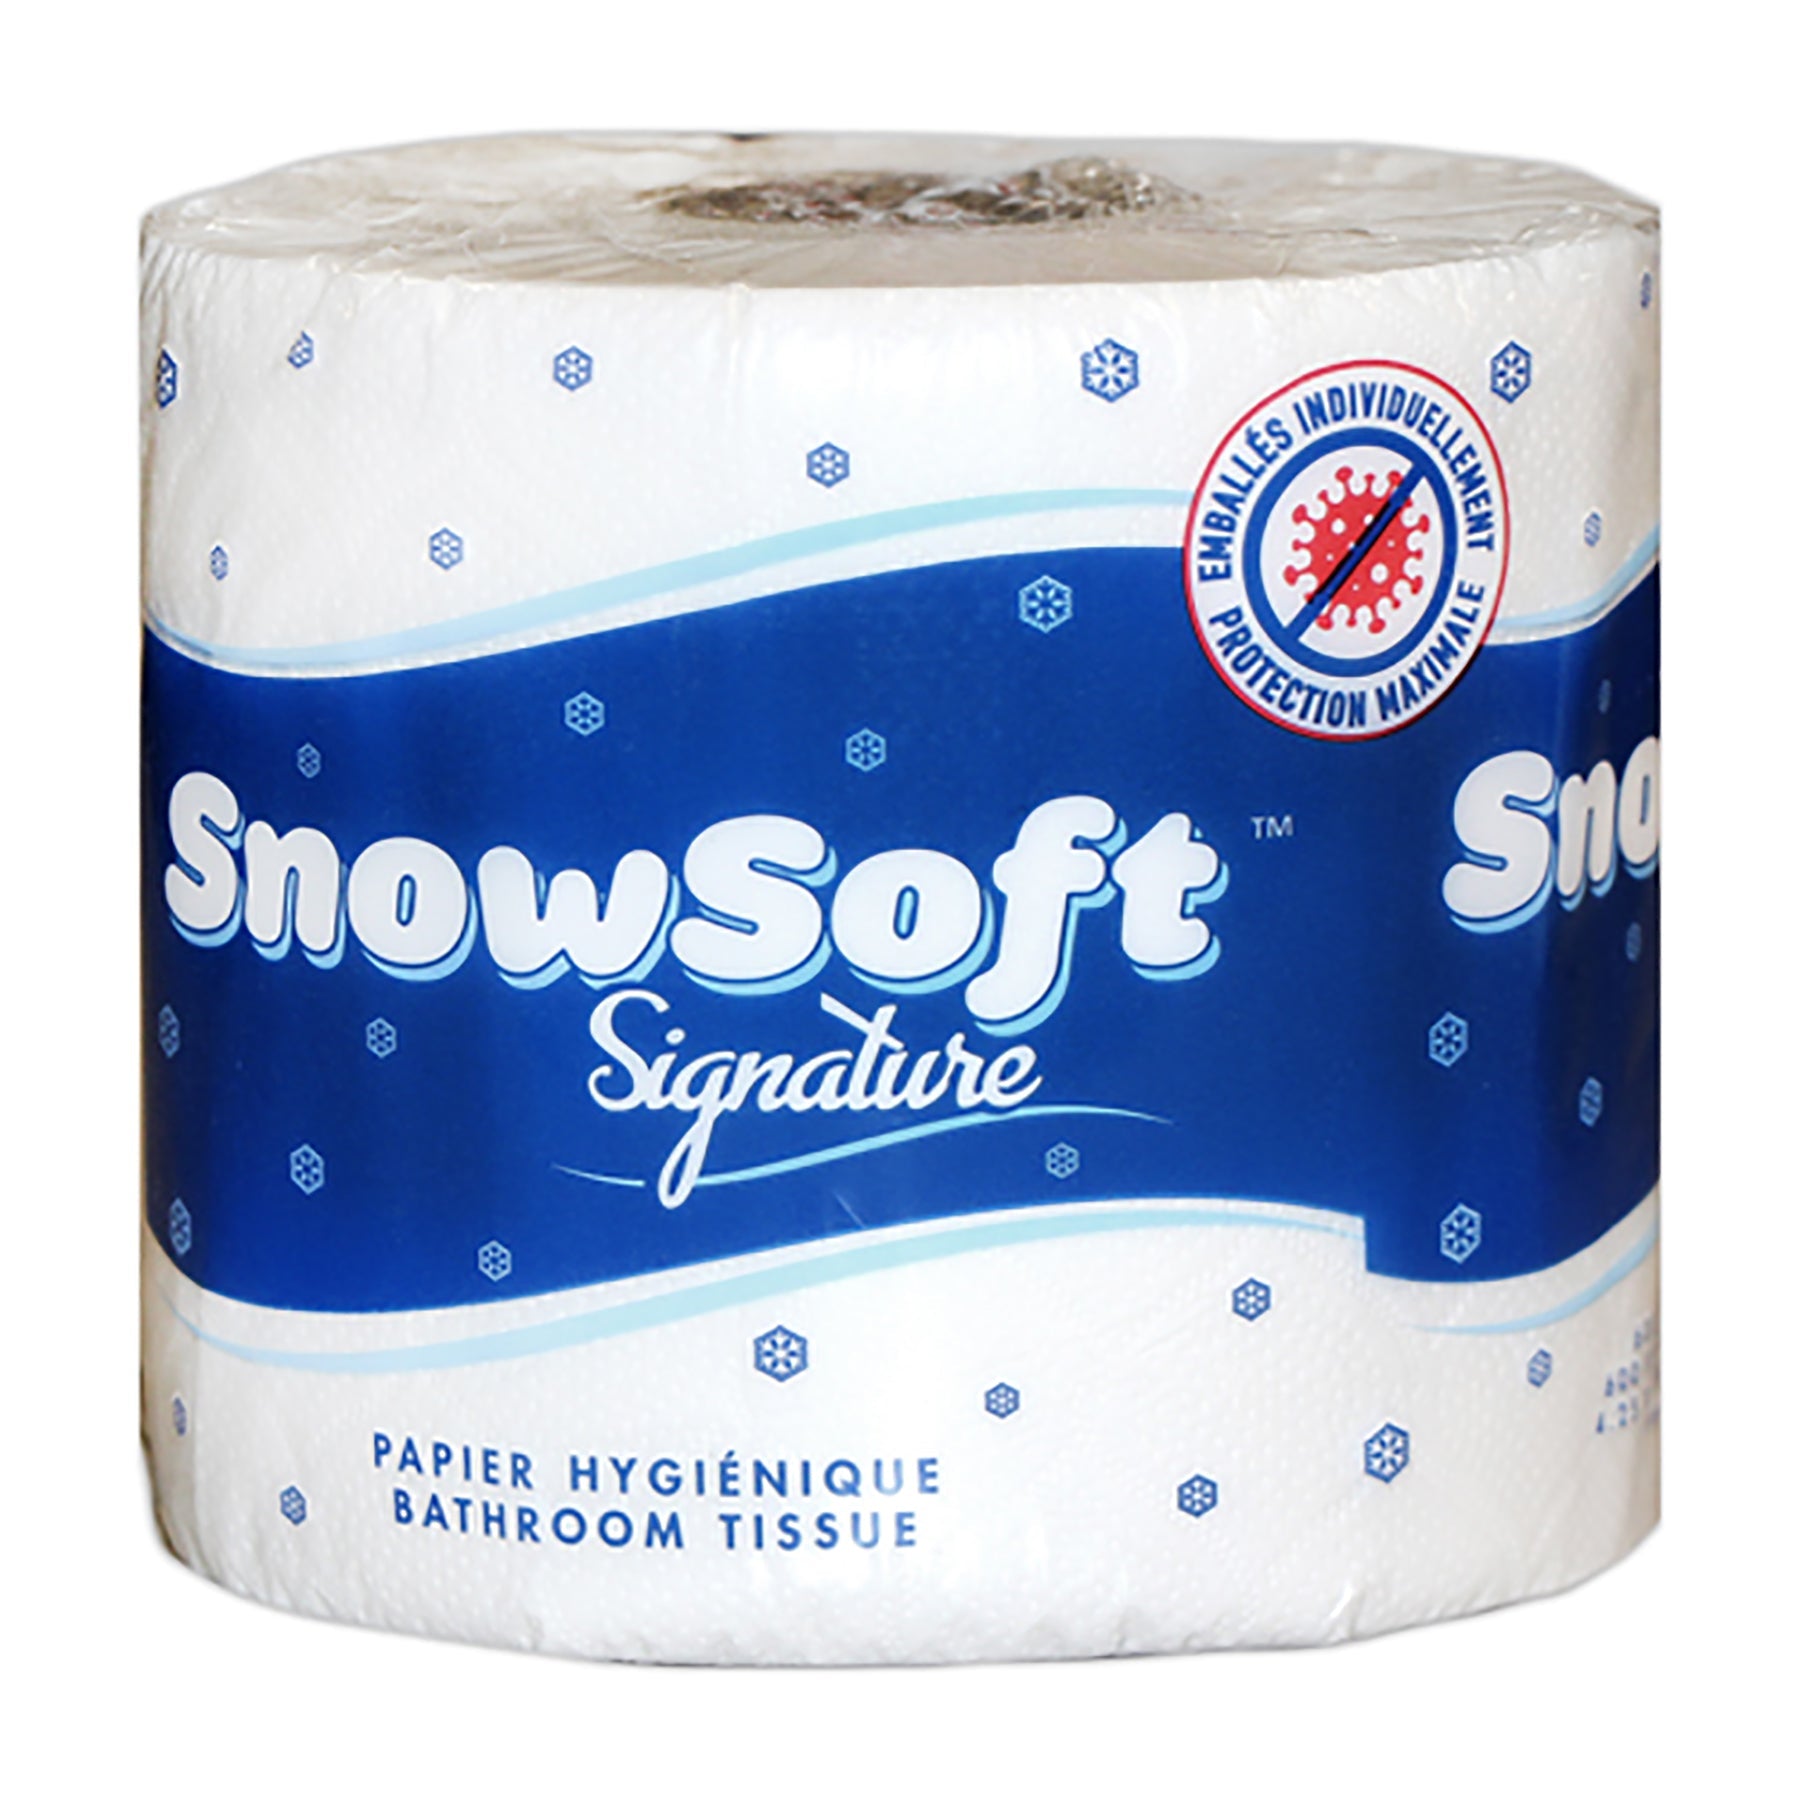 Snow Soft Bathroom Tissues 2 Ply 600 Sheets 